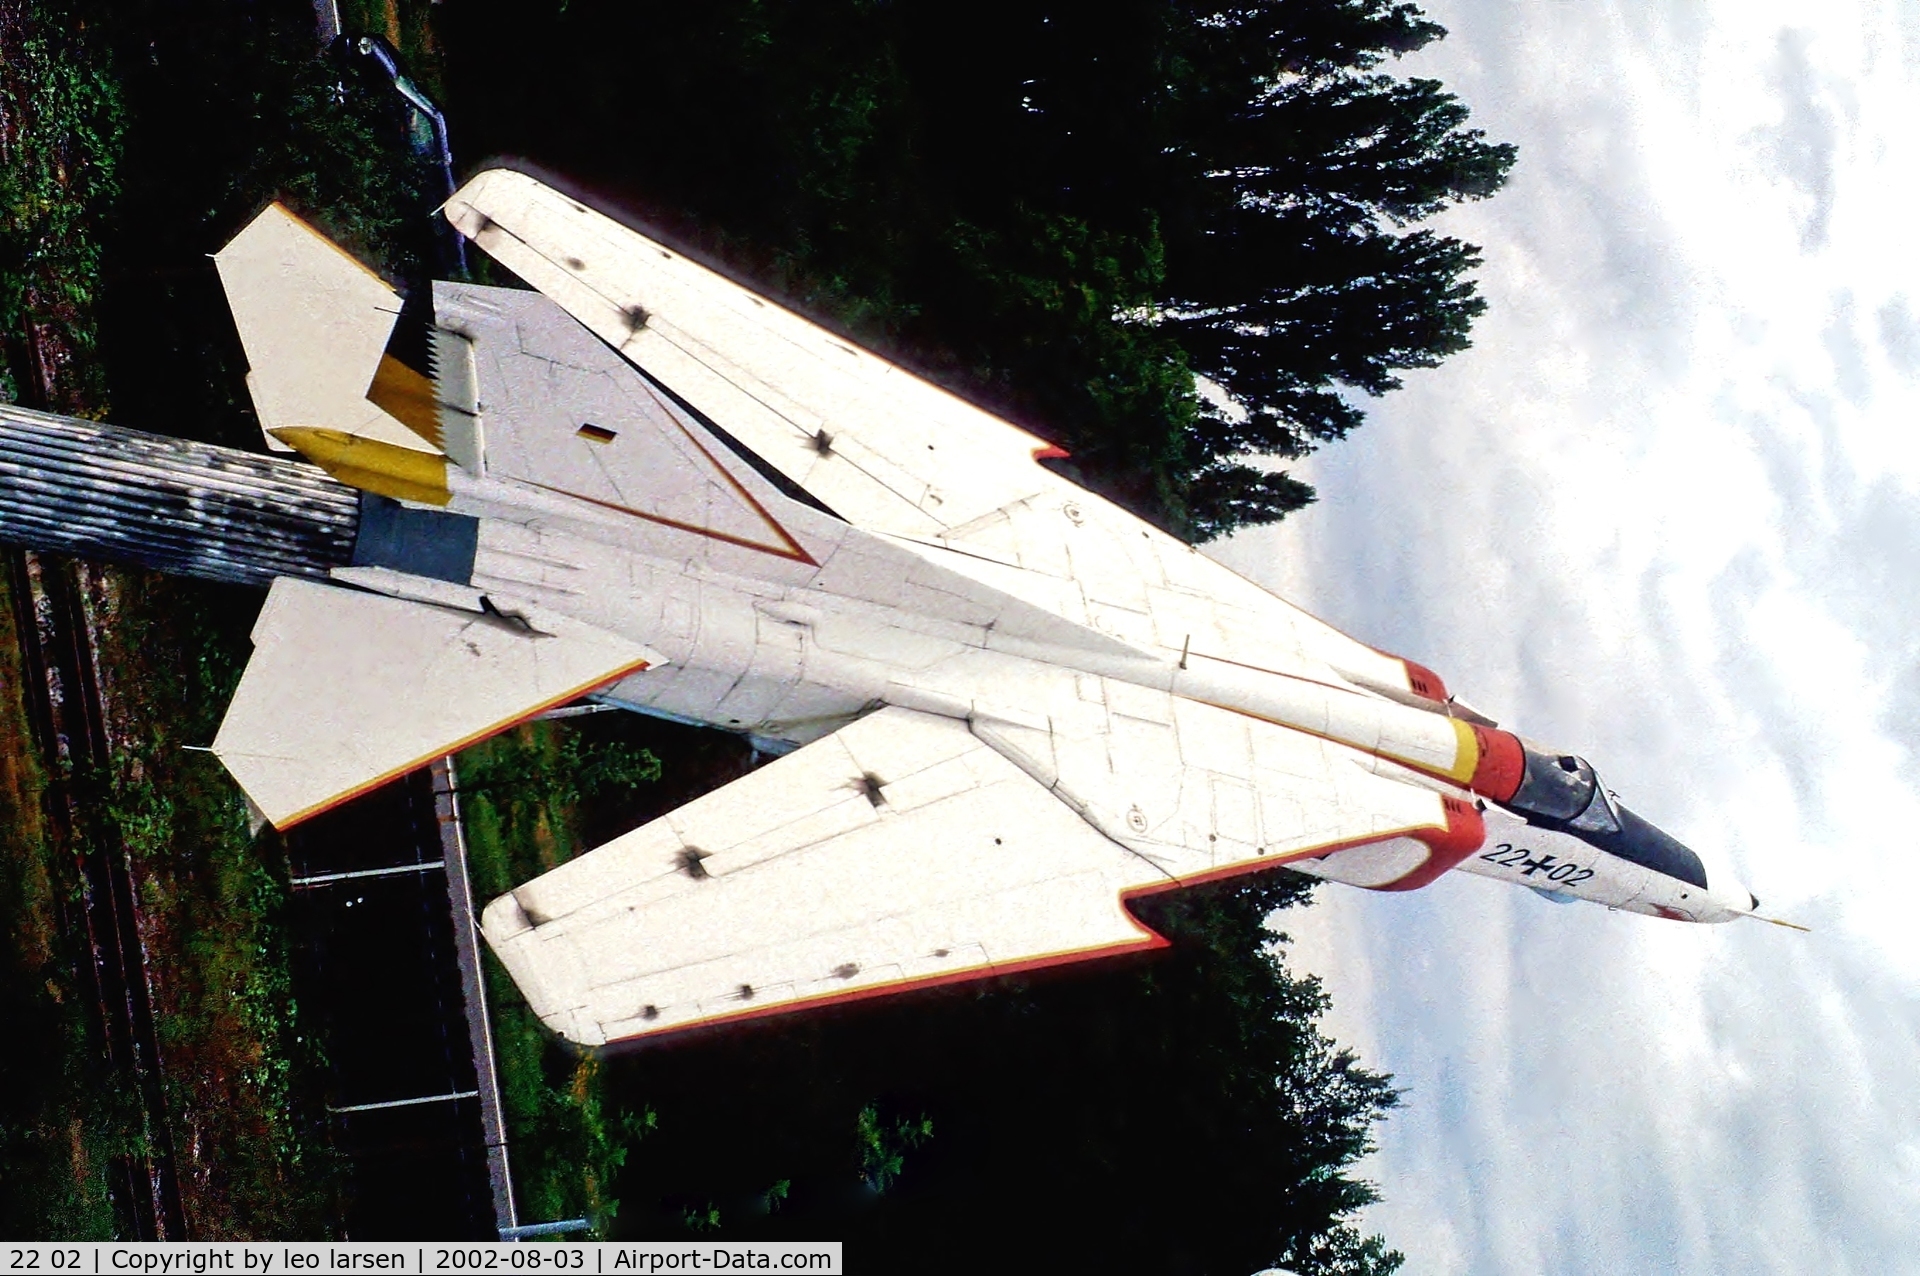 22 02, Mikoyan-Gurevich MiG-23 C/N 0393211087, Speyre Museum 3.8.02.Fake s/n shoul be 20+39 and 690 EGAF